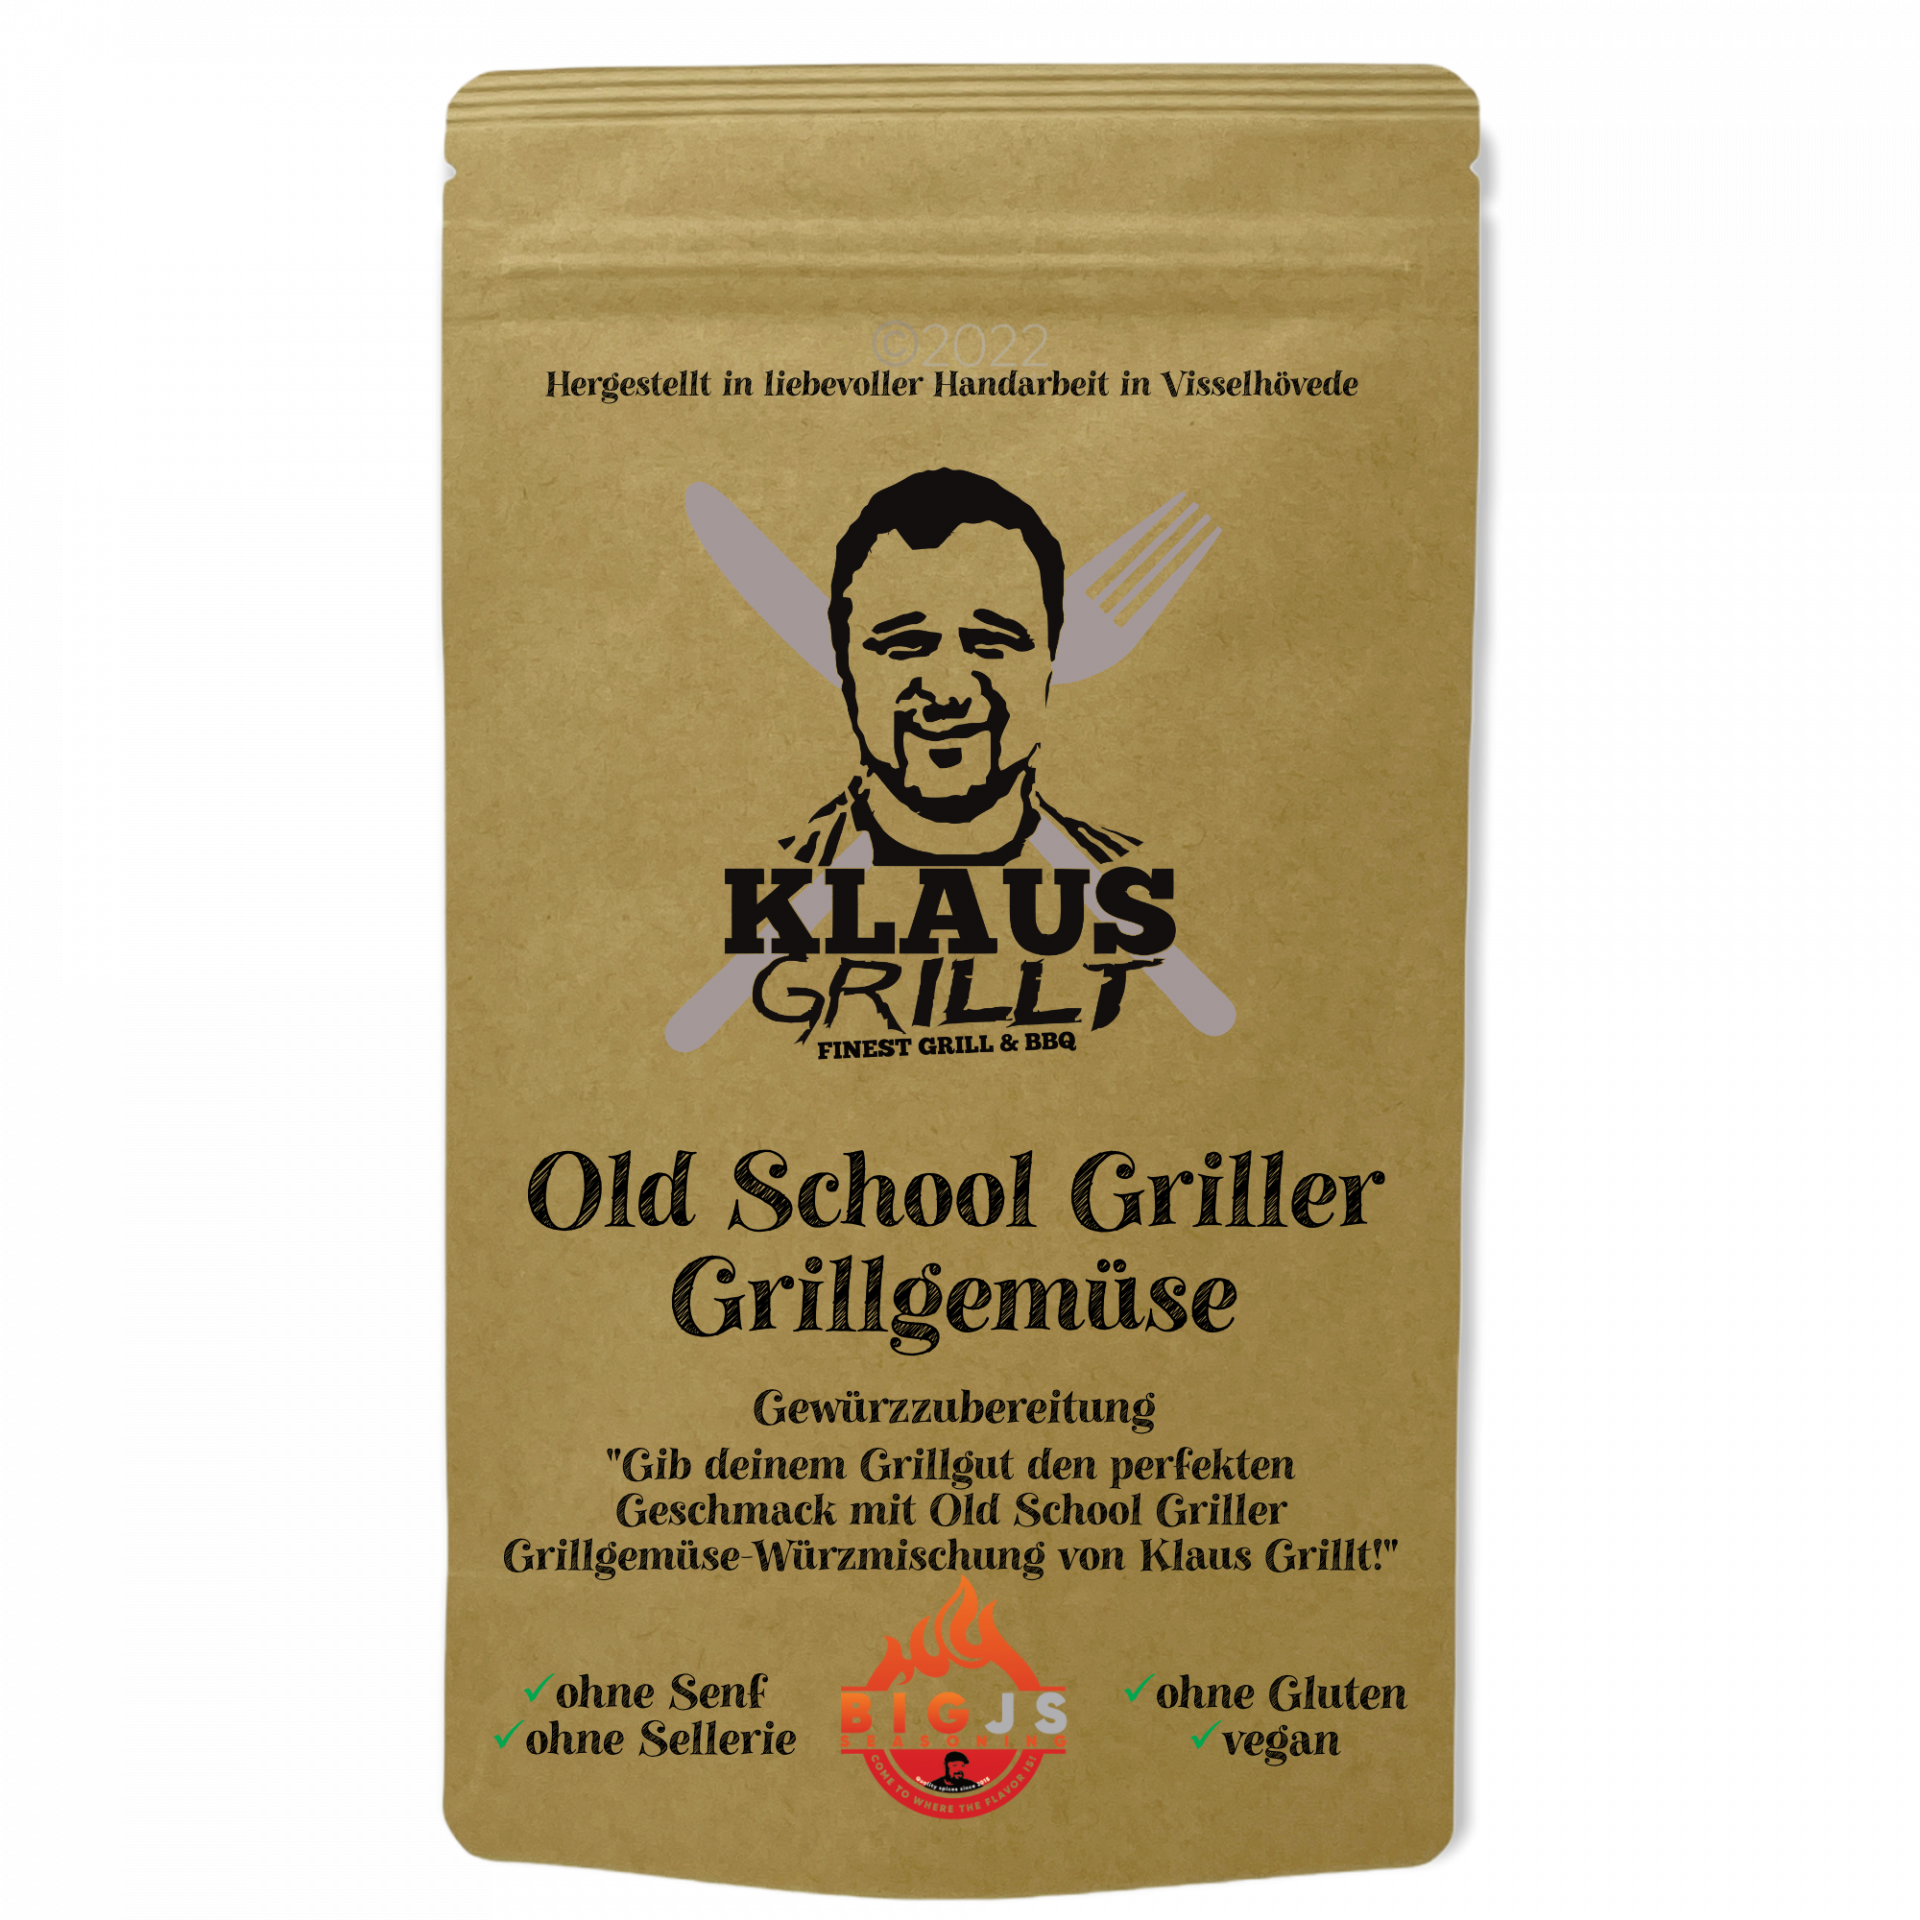 Klaus grillt Old School Griller Grillgemüse 250g Beutel